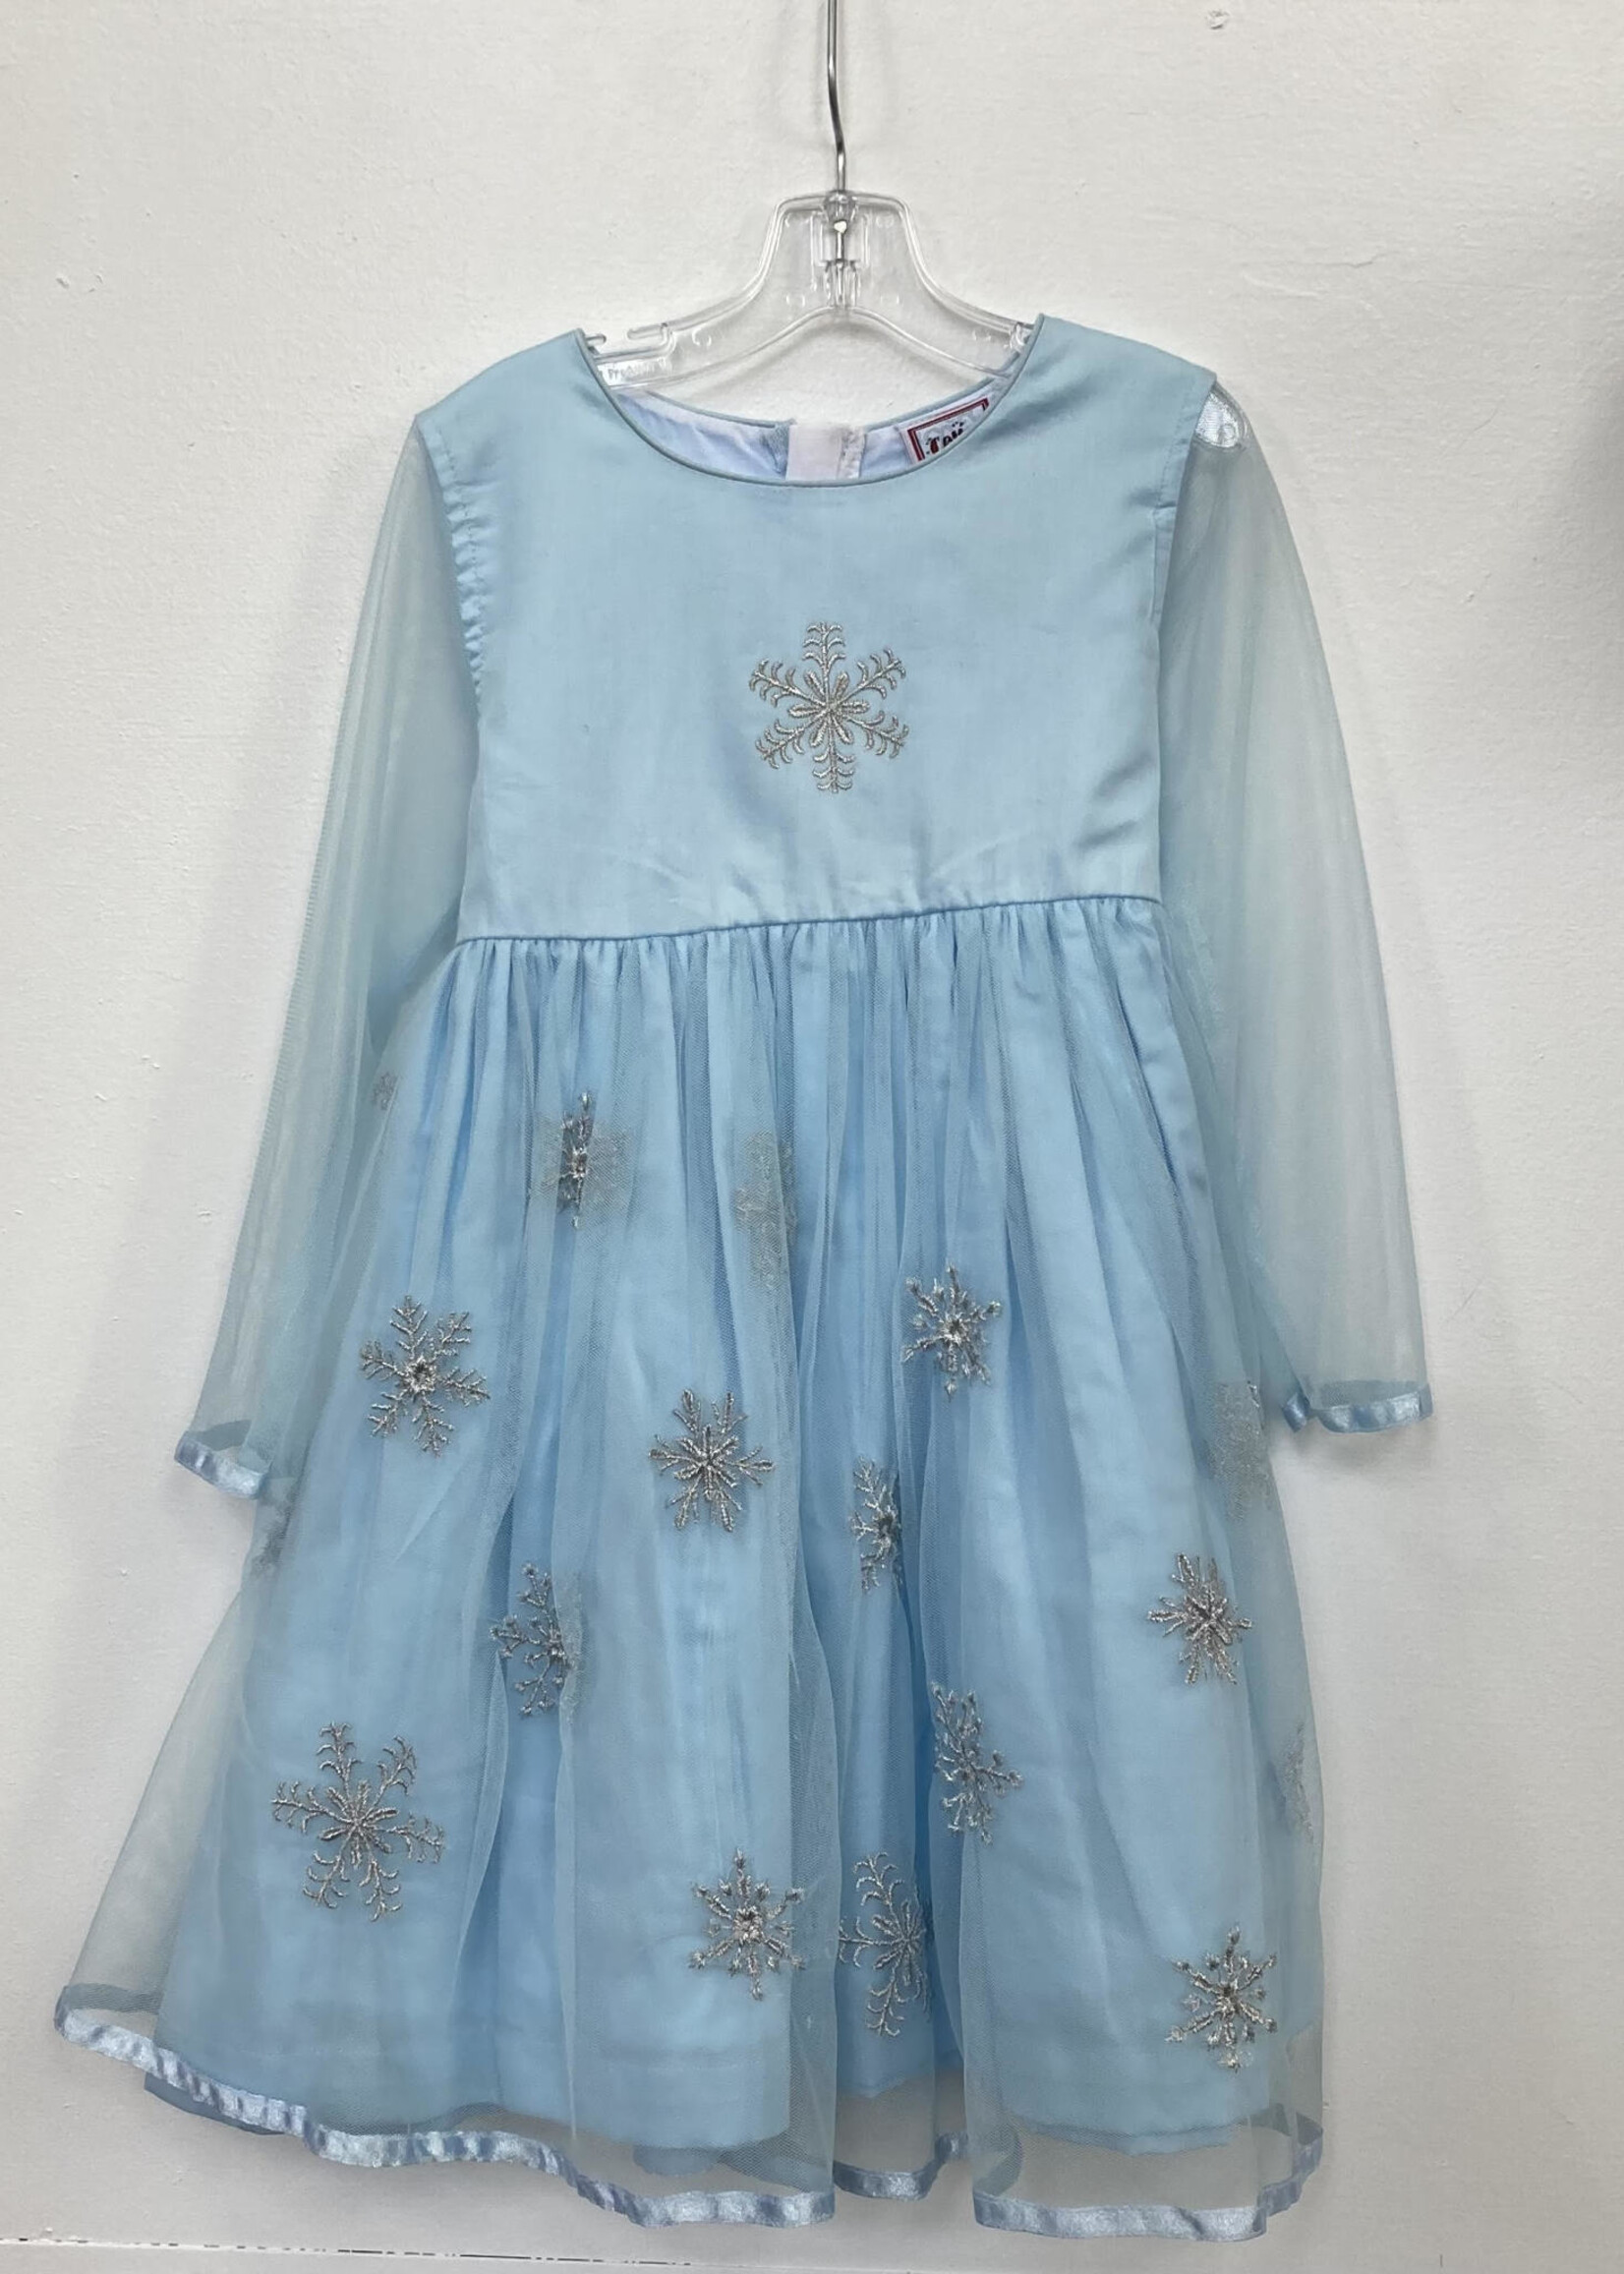 Lt. Blue Tulle Snowflake Dress